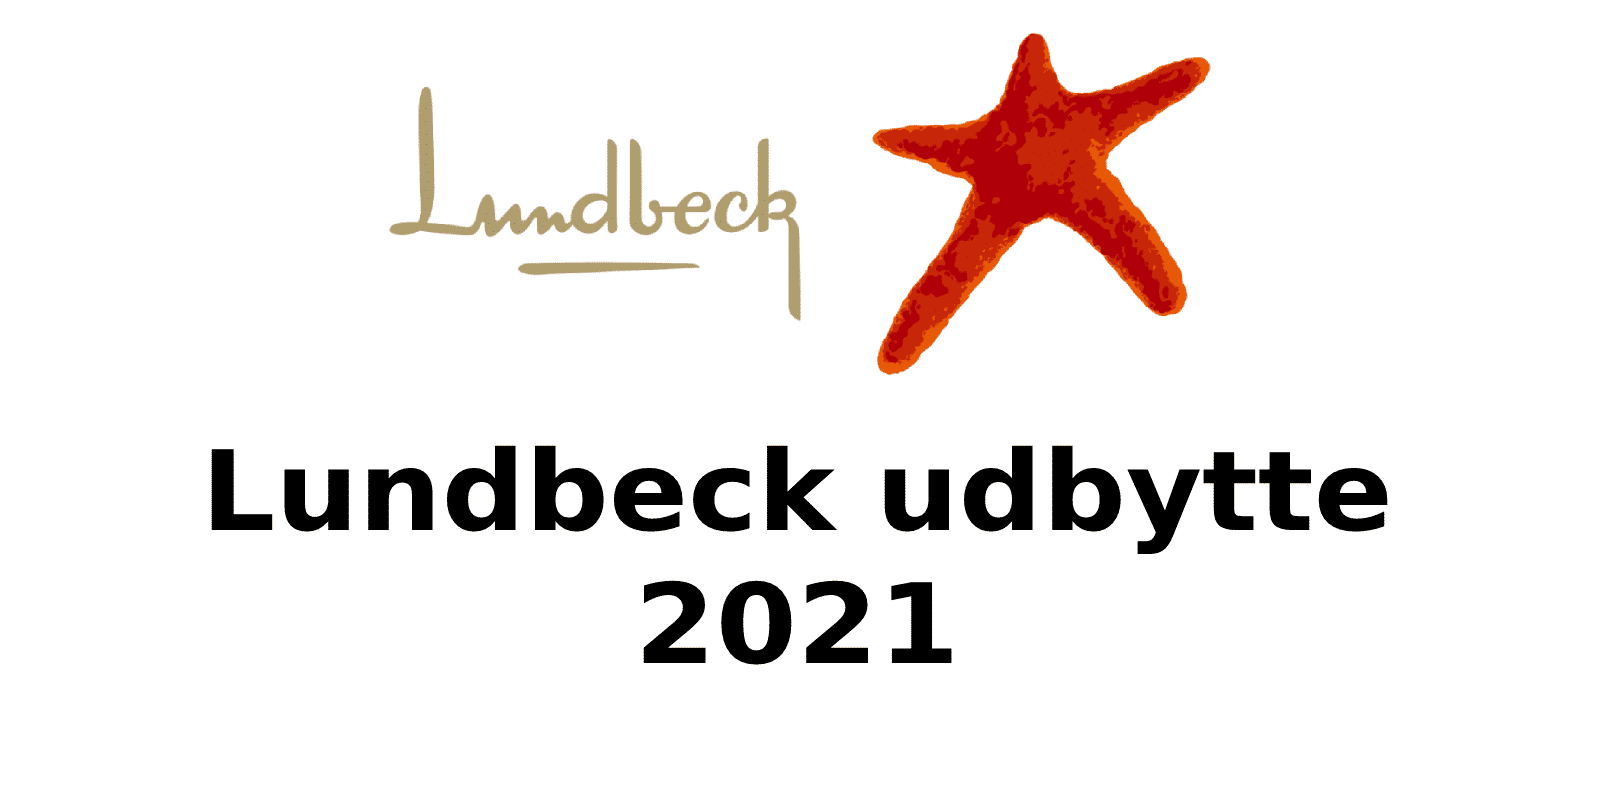 Lundbeck udbytte 2021